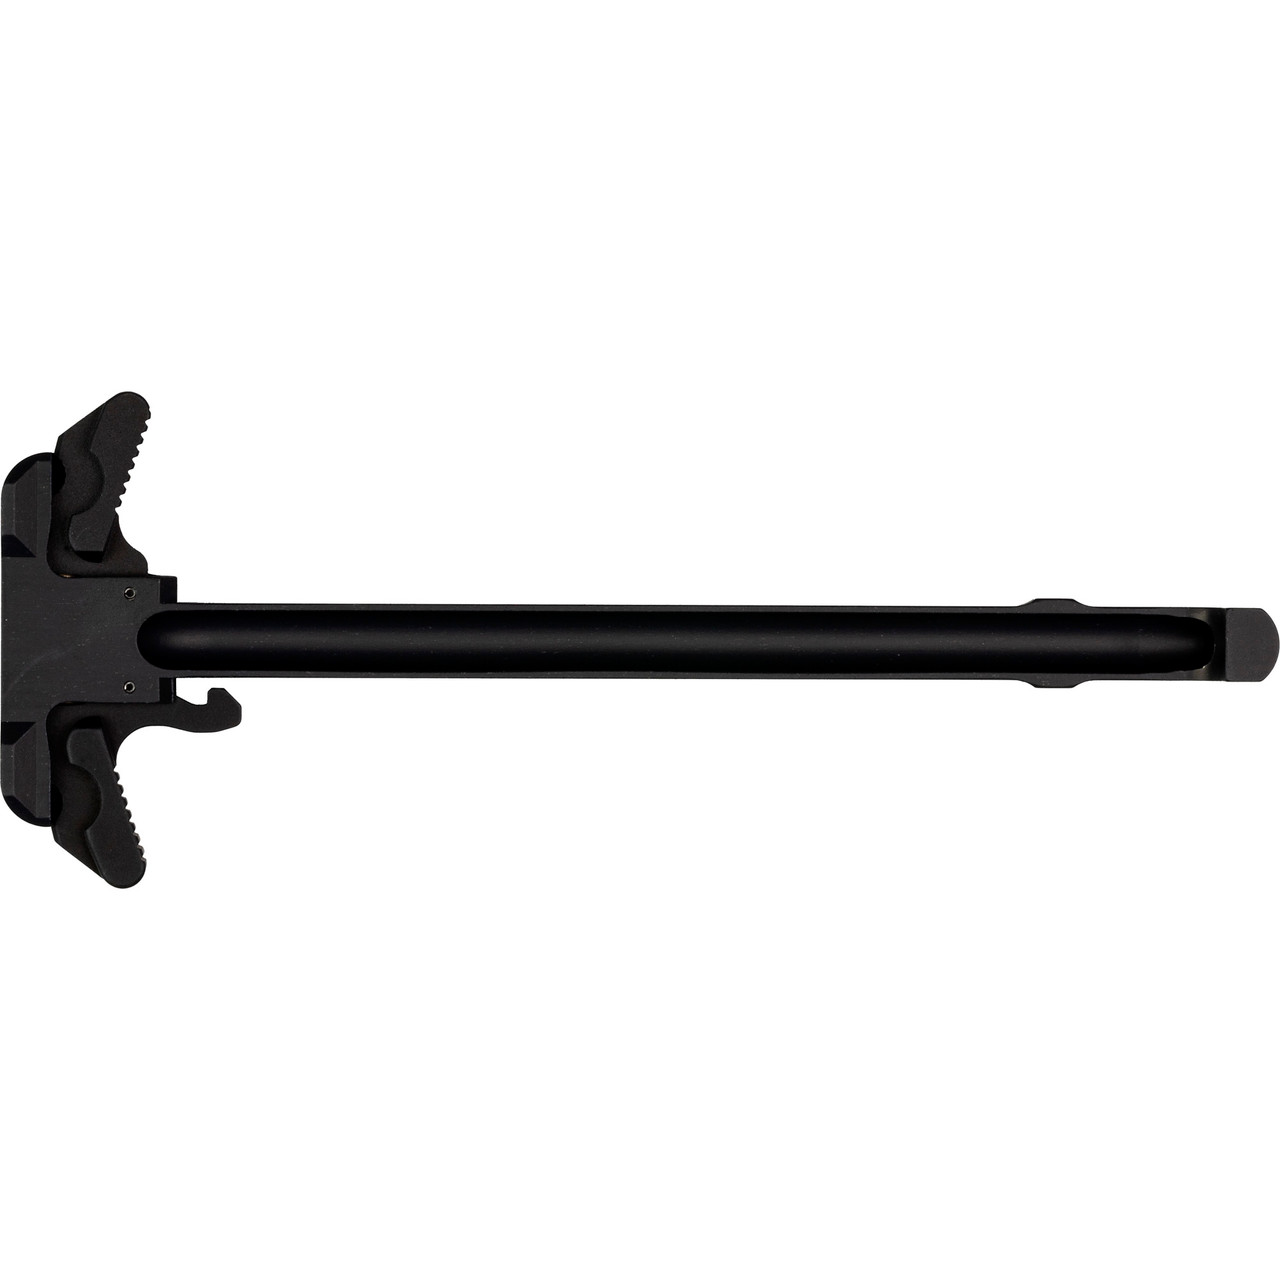 Vltor AR-15 Medium Ambi Charging Handle